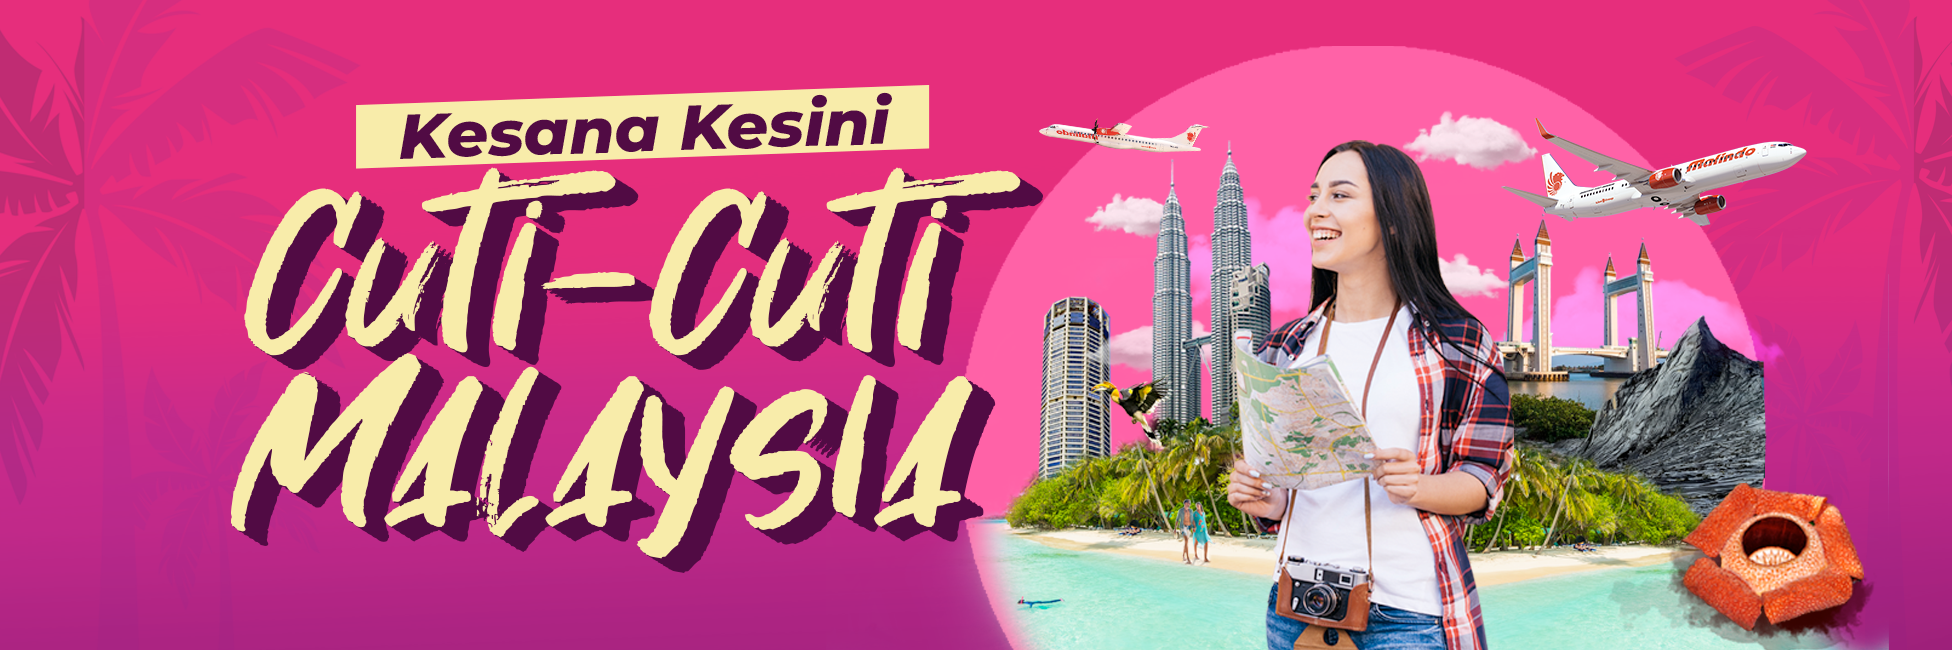 Malindo Air Cuti Cuti Malaysia OD CuticutiMalaysia